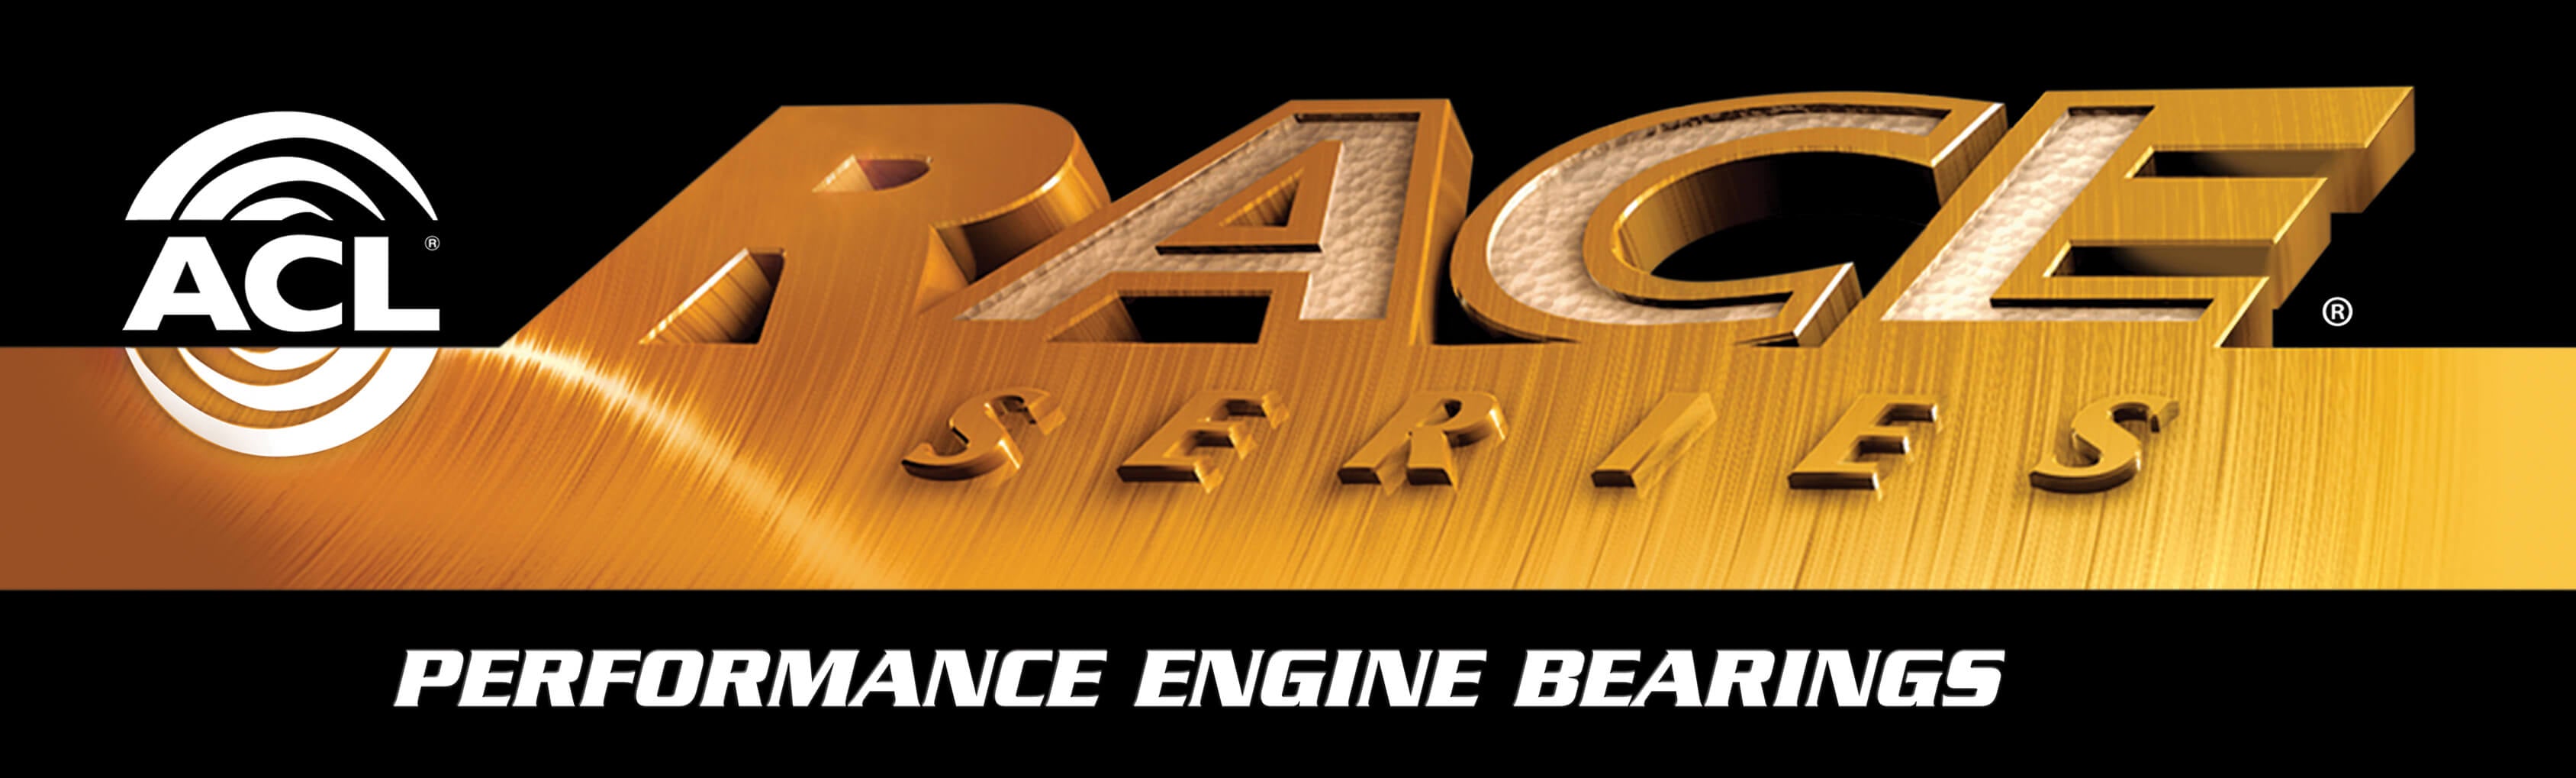 ACL Race Series Engine Bearings